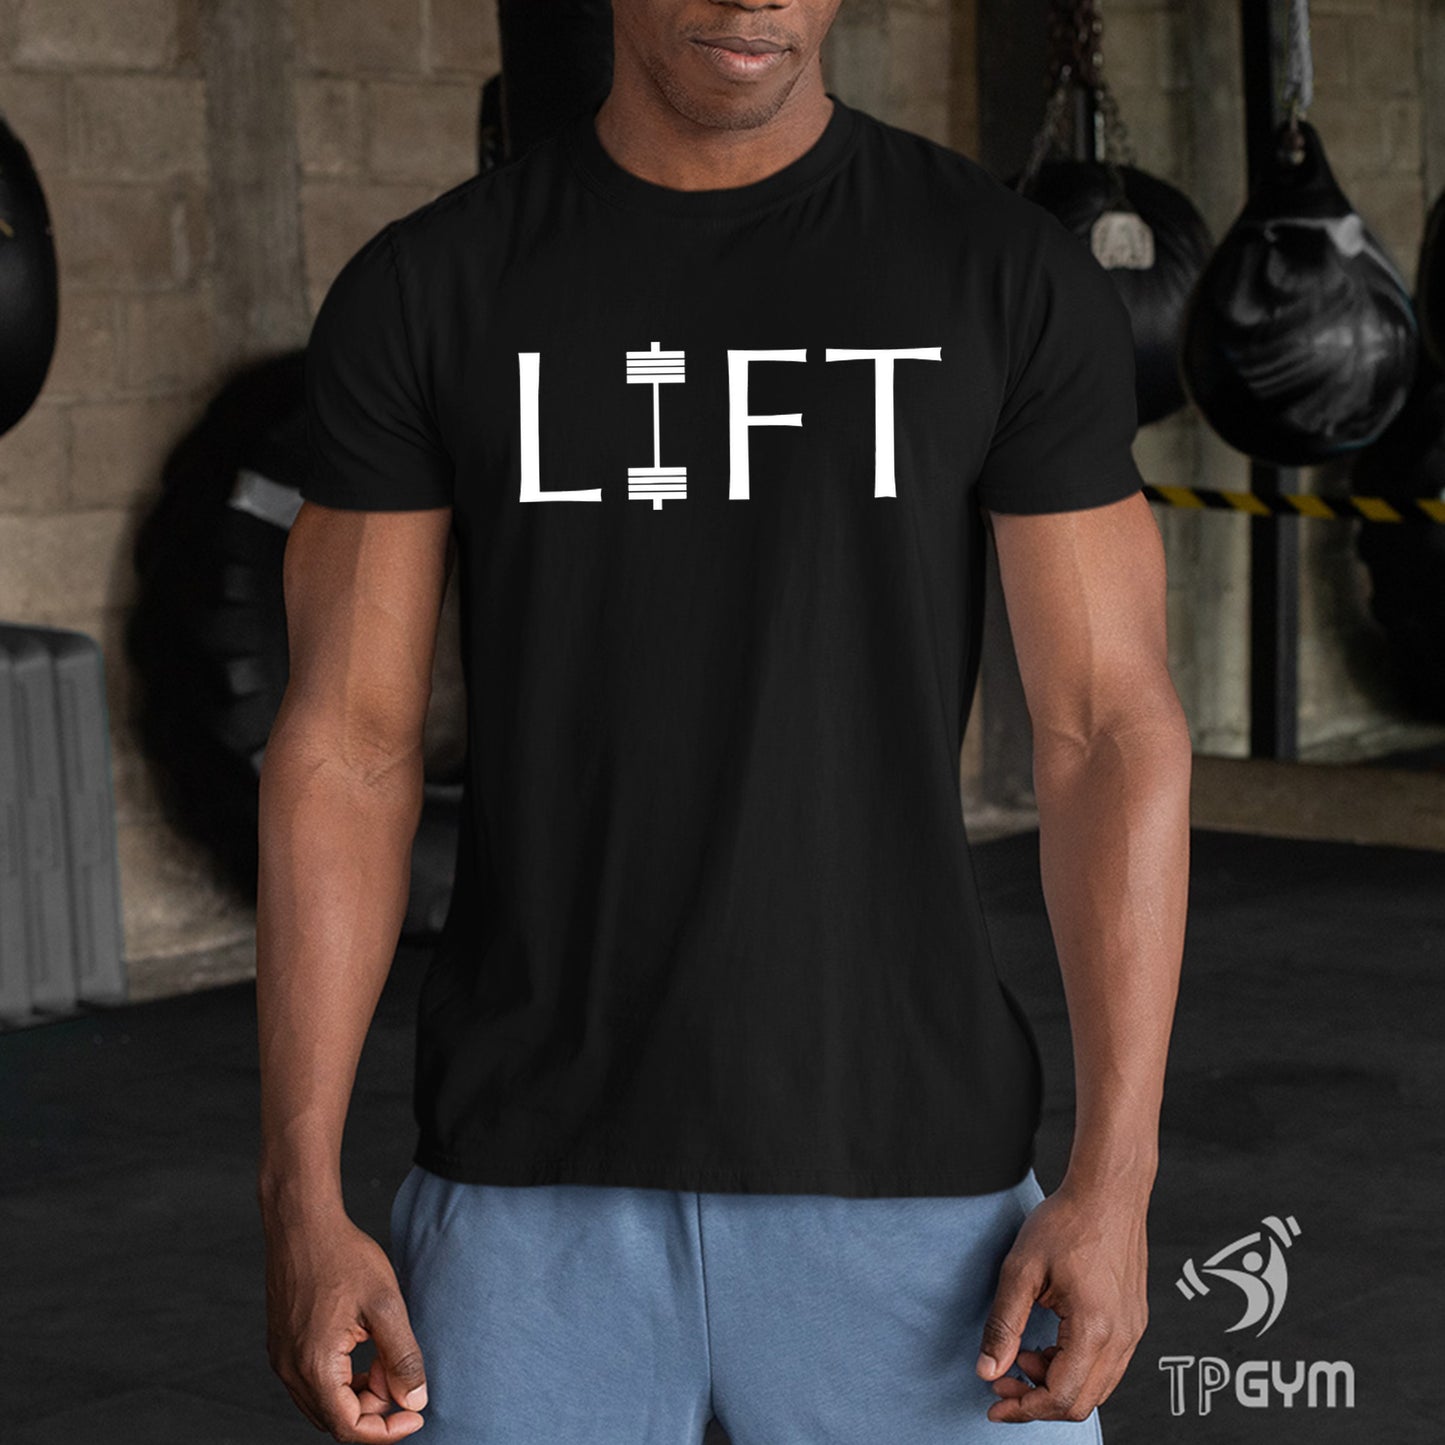 Gym Fitness crossfit T shirt Lift Dumbbells